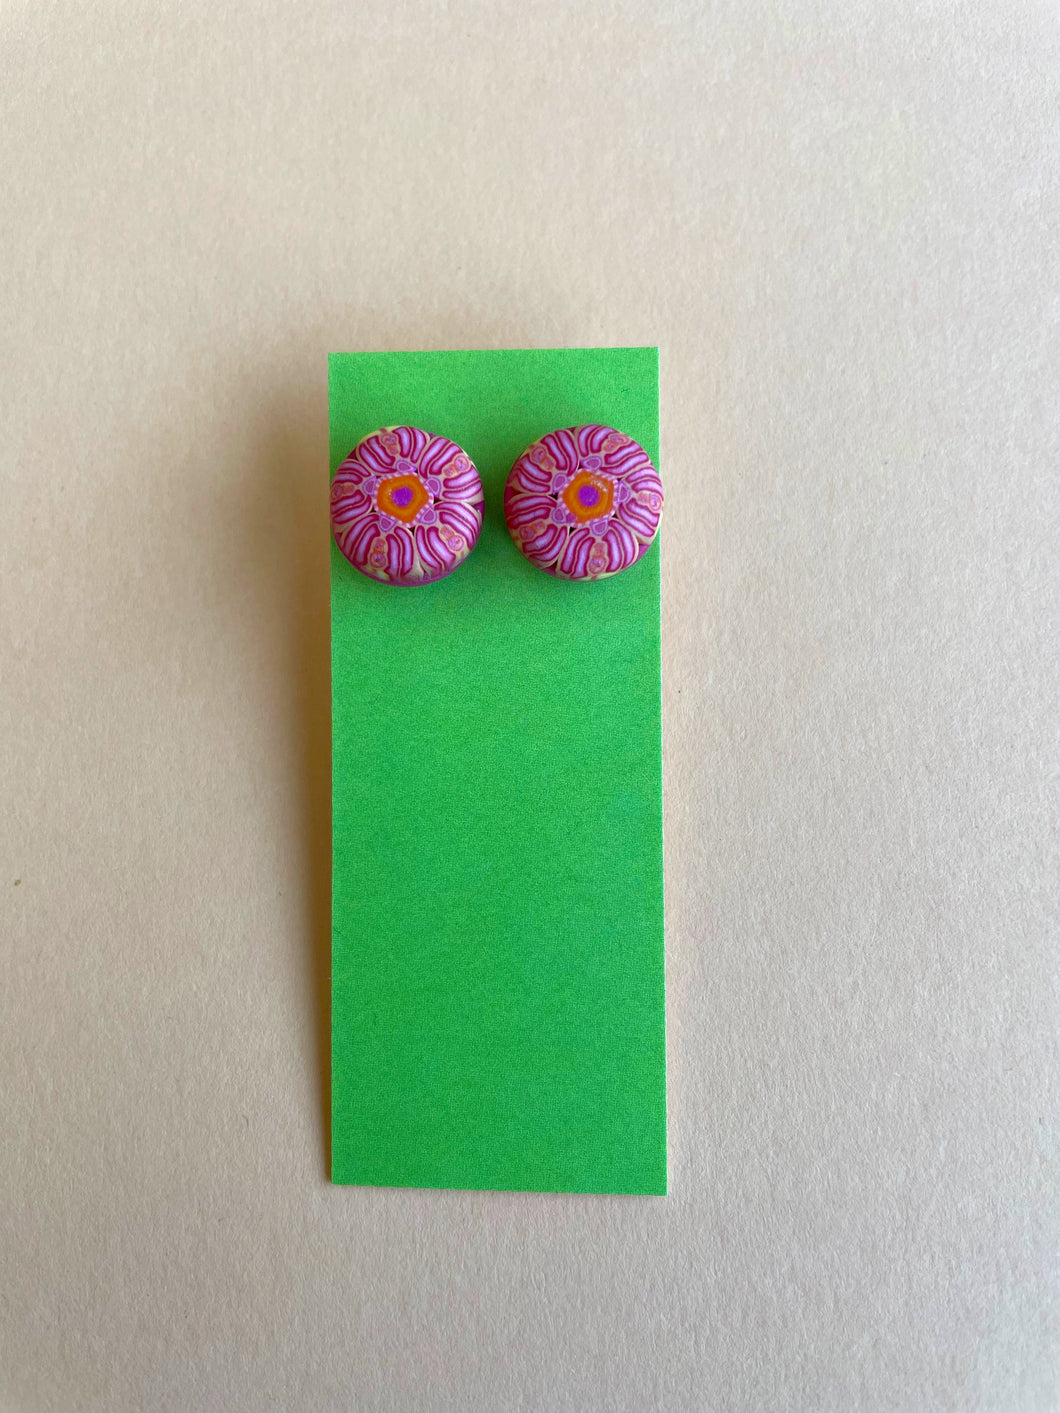 Stud earrings in pink flower design